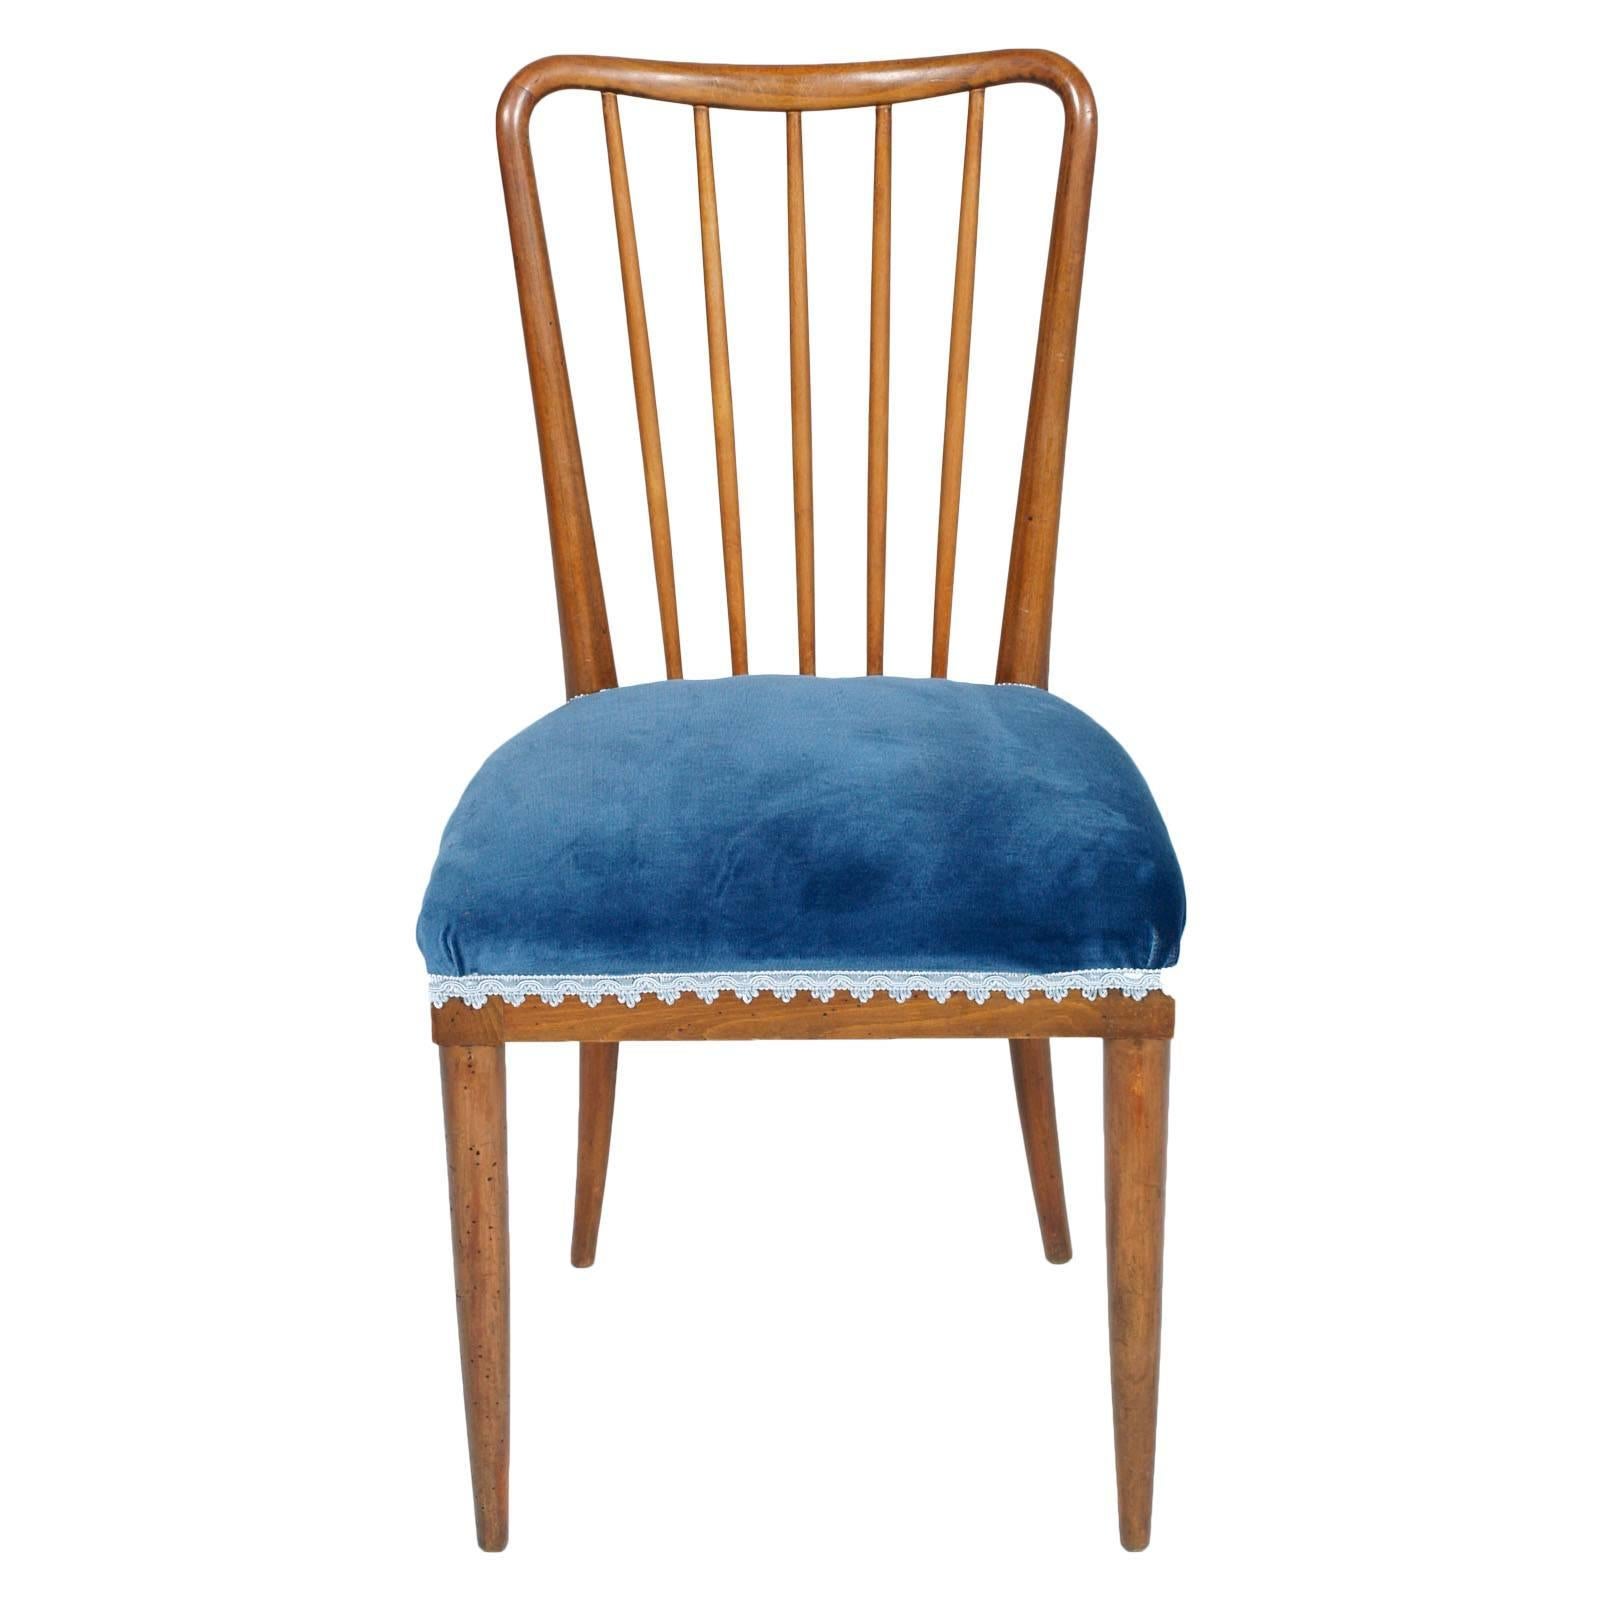 Italian Mid-Century Modern 1950s Paolo Buffa Side Chairs in Blond Walnut New Upholstery